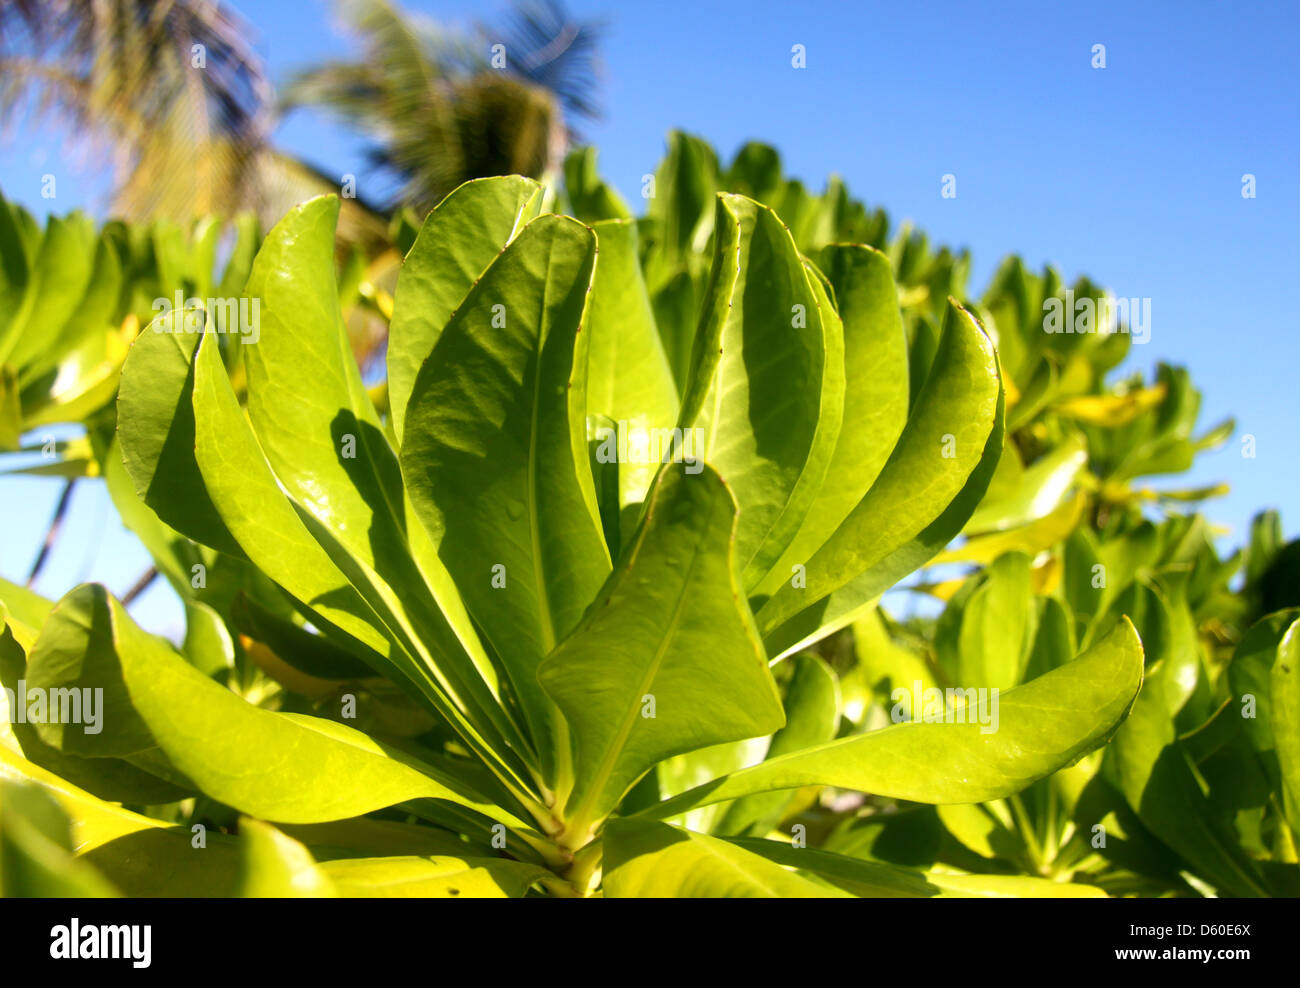 Leaves of mangrove trees Stock Photo